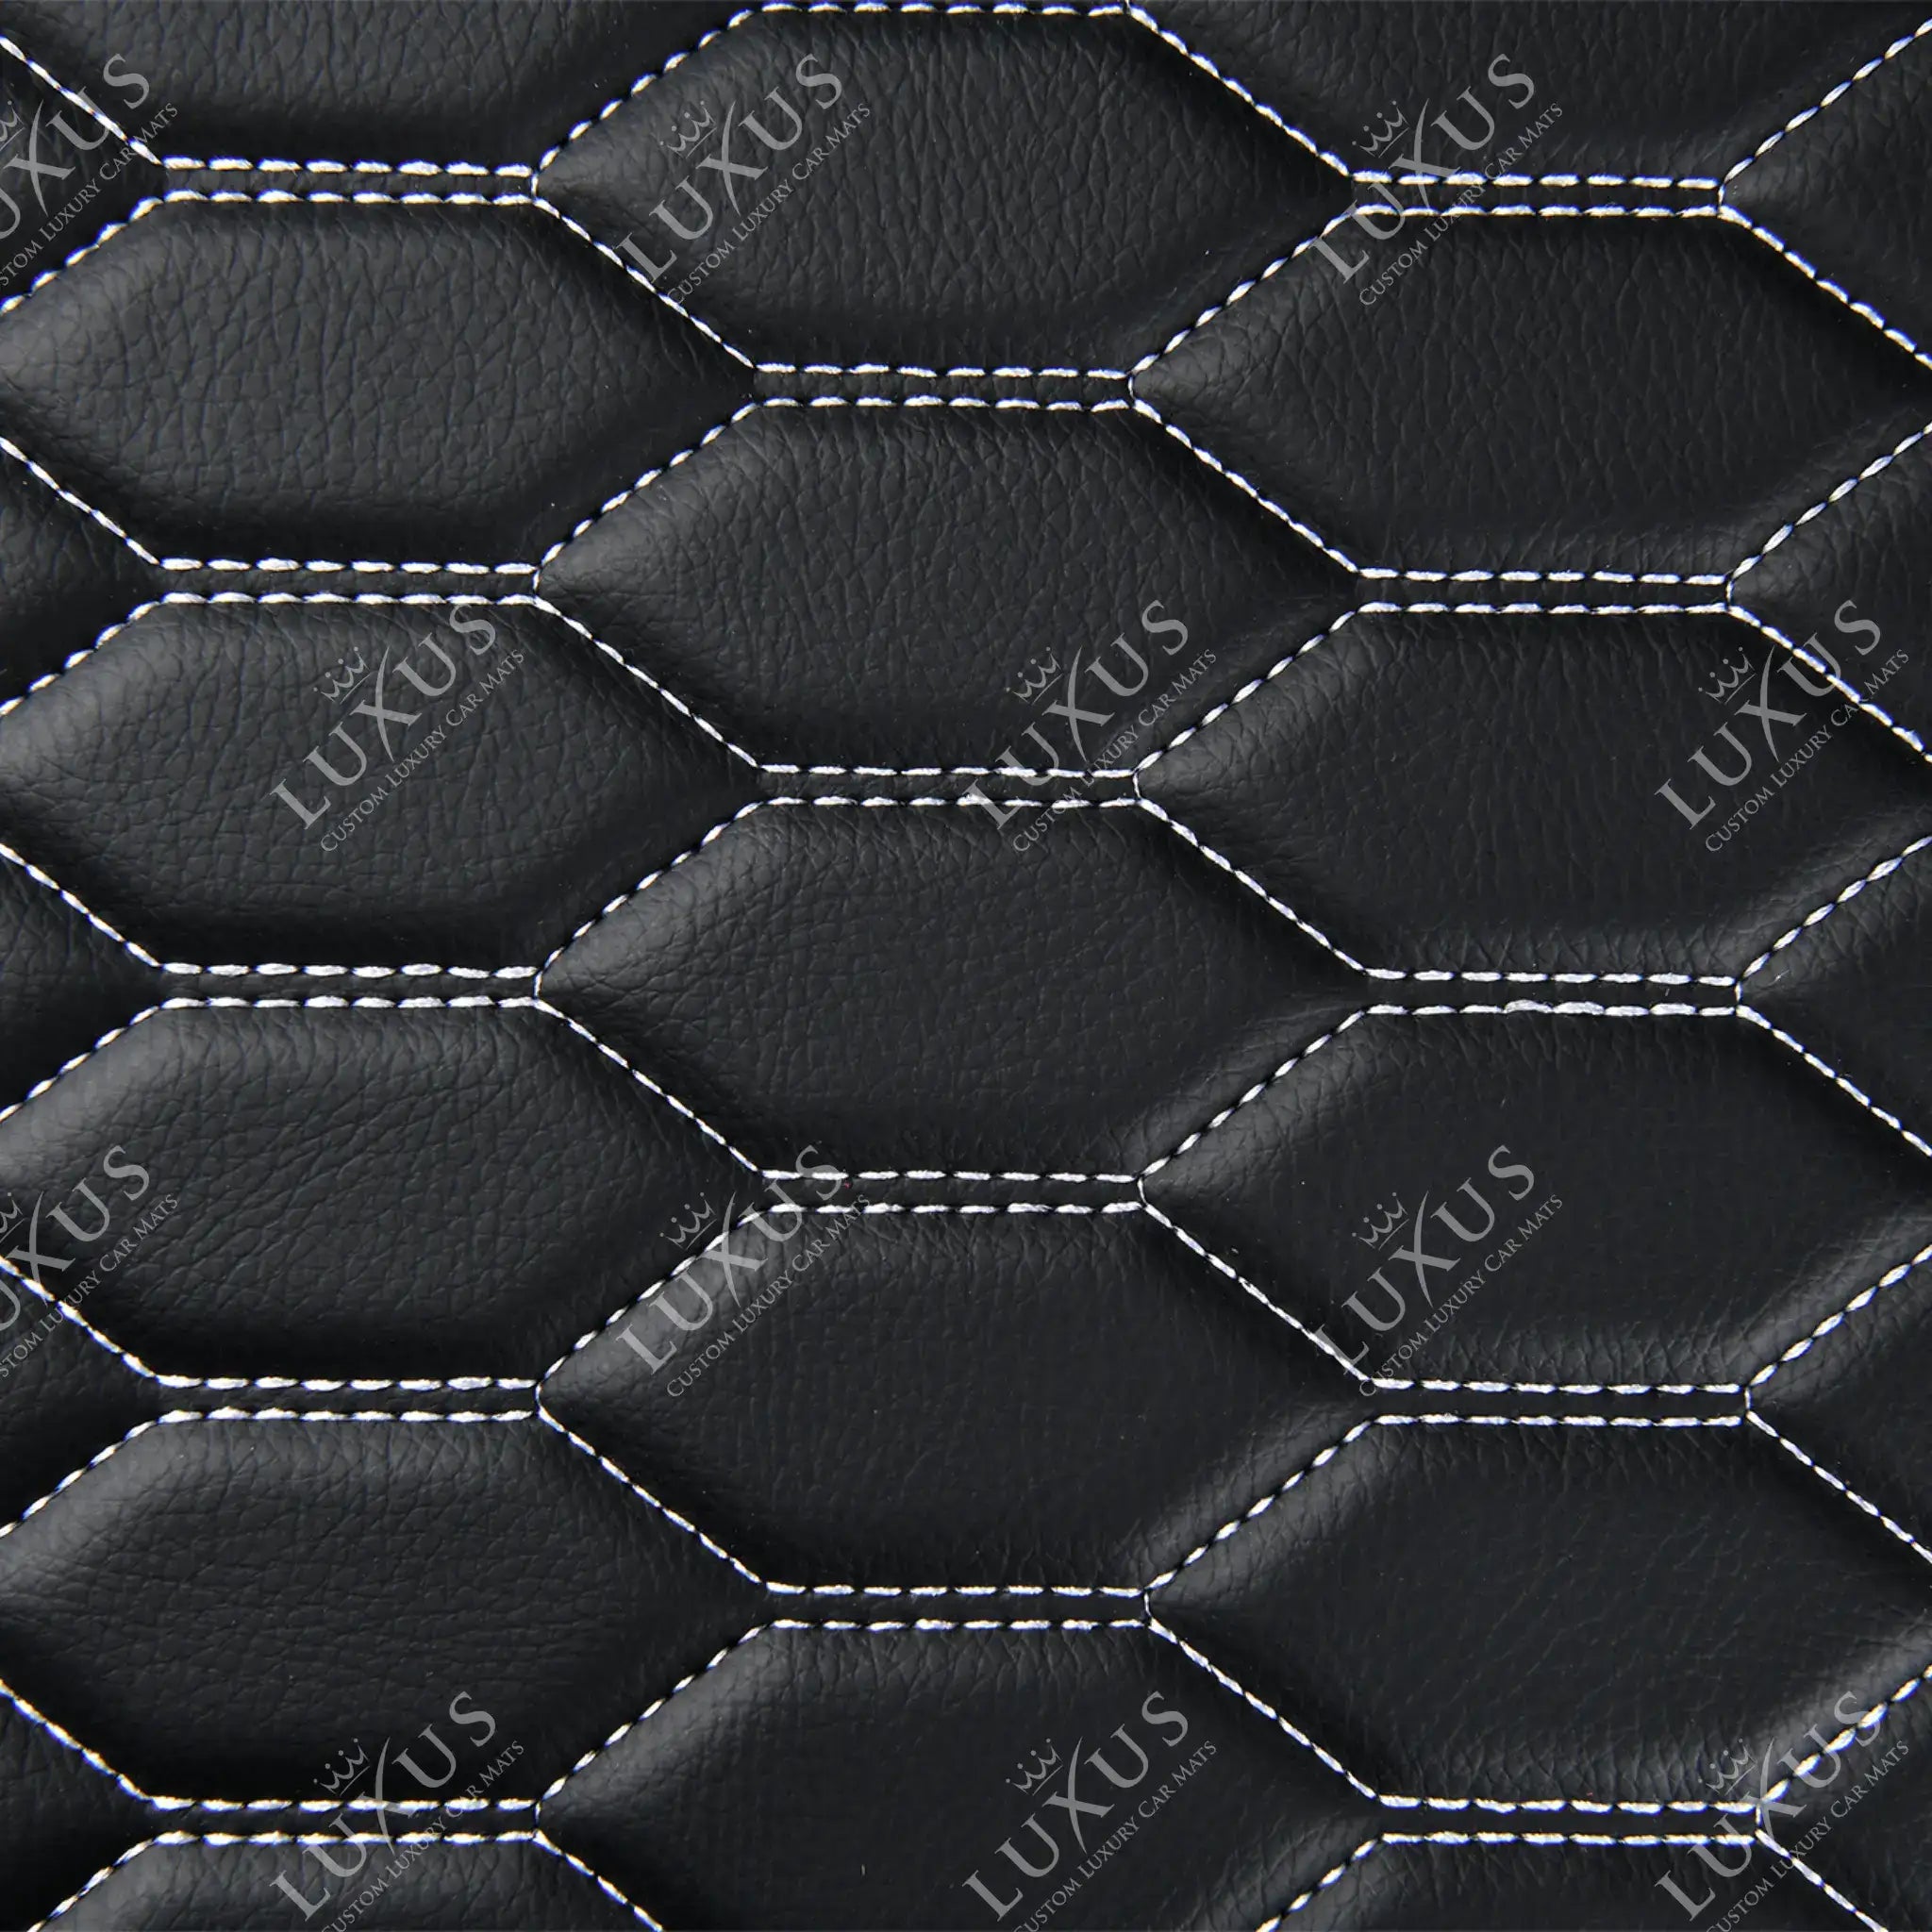 NEW Black & White Stitching 3D Honeycomb Luxury Boot/Trunk Mat